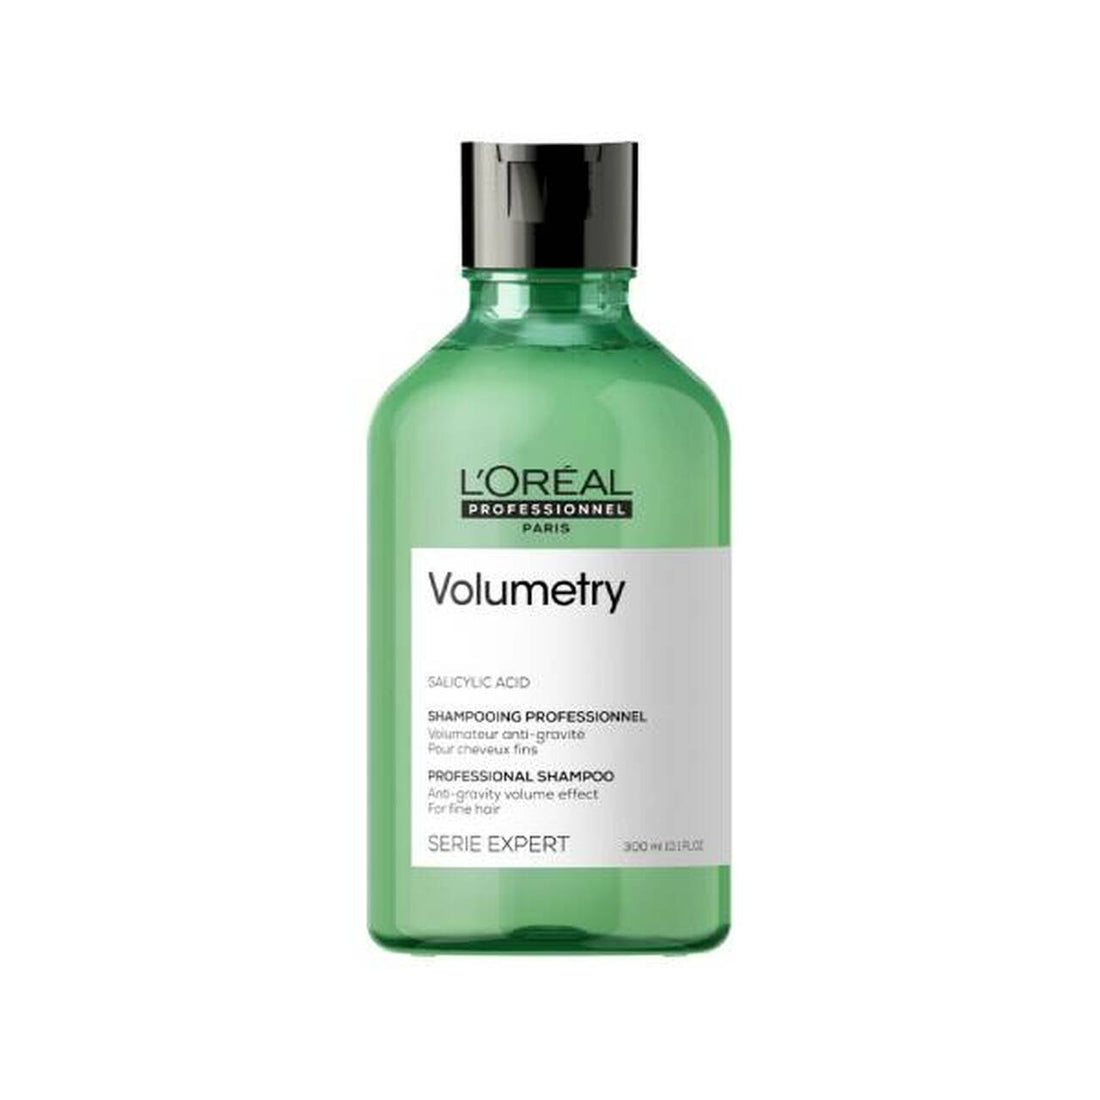 Loreal Volumetry Shampoo